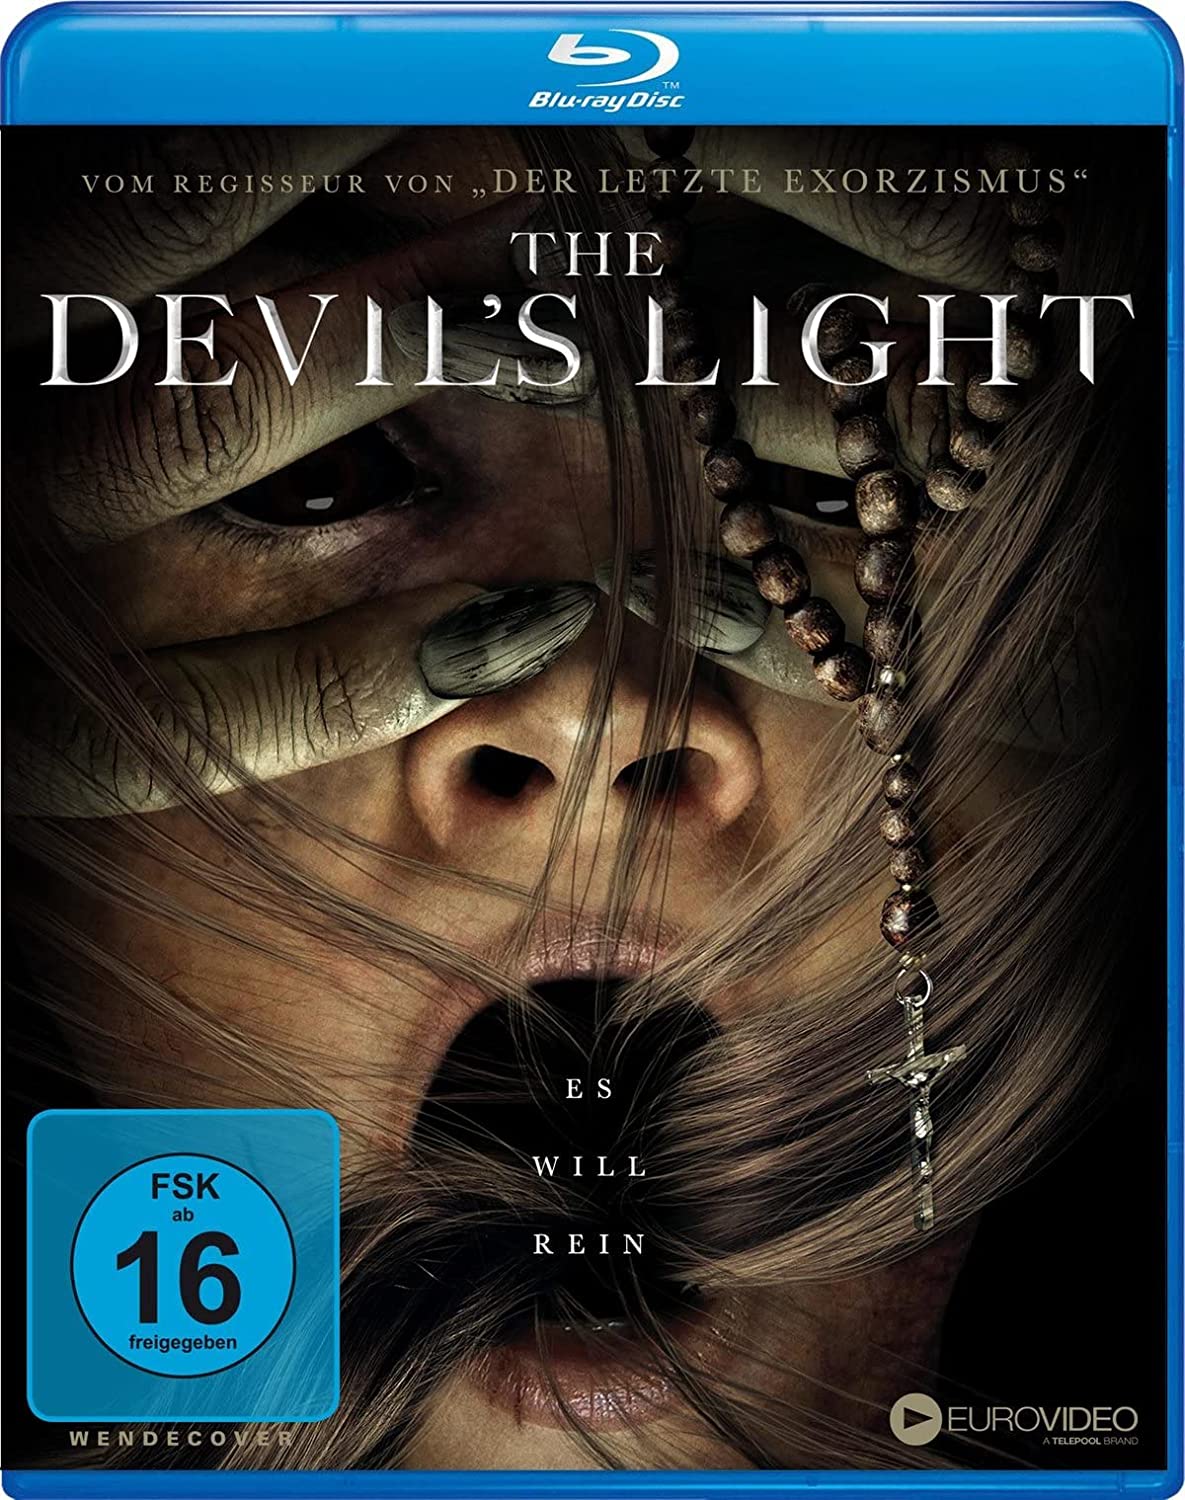 The Devil's Light - Bluray Cover